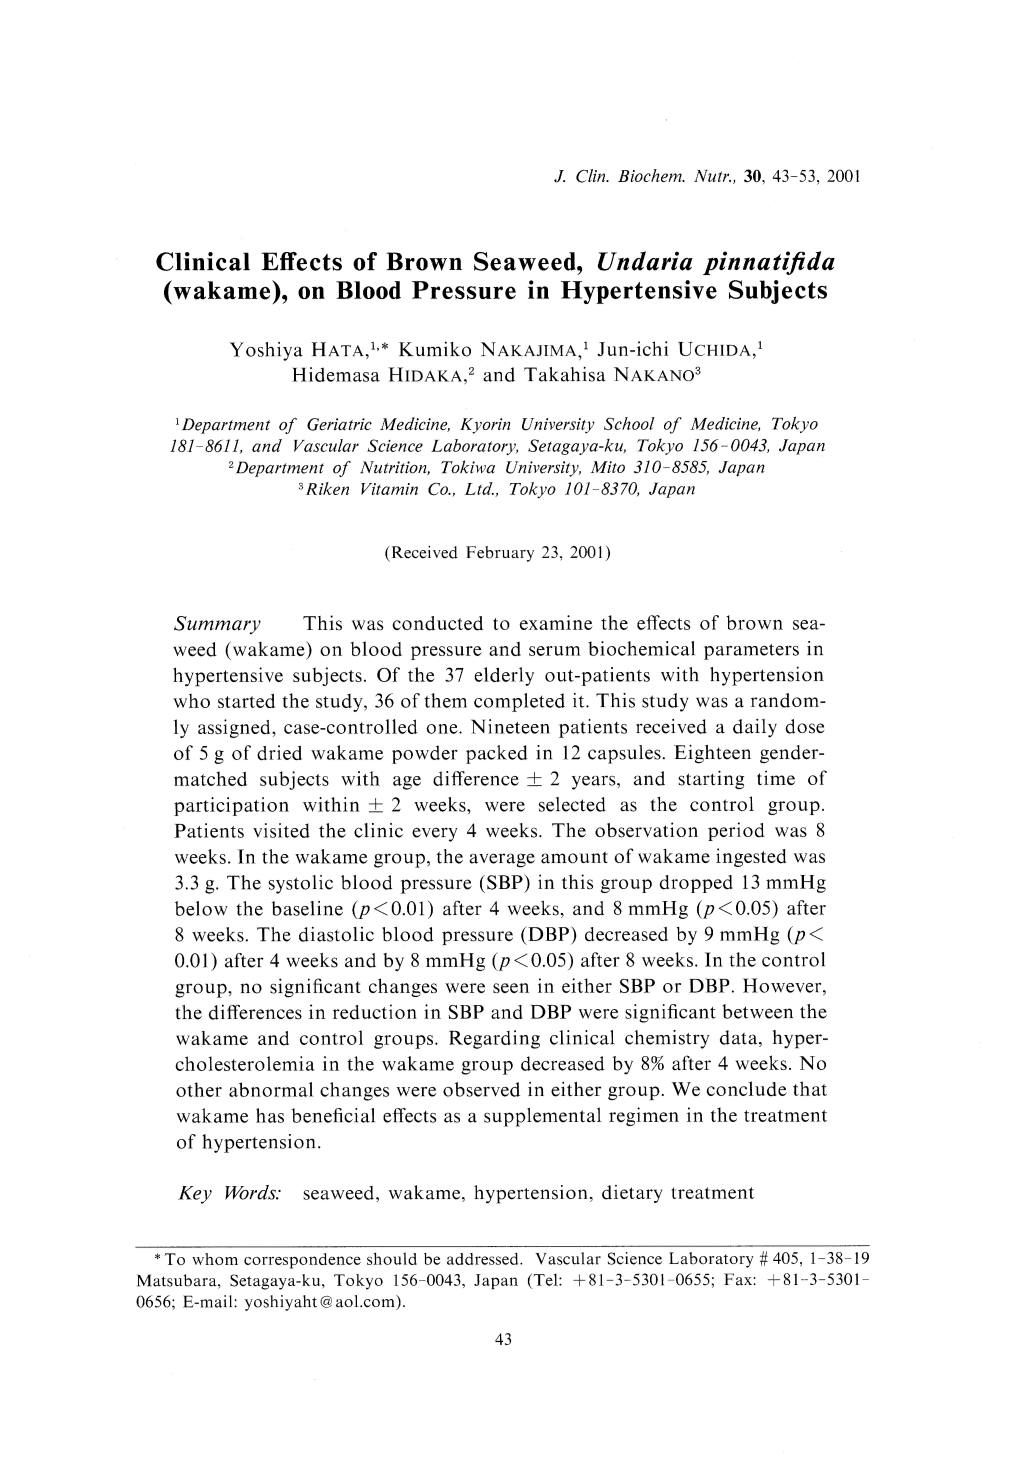 Clinical Effects of Brown Seaweed, Undaria Pinnatifida (Wakame), on Blood Pressure in Hypertensive Subjects